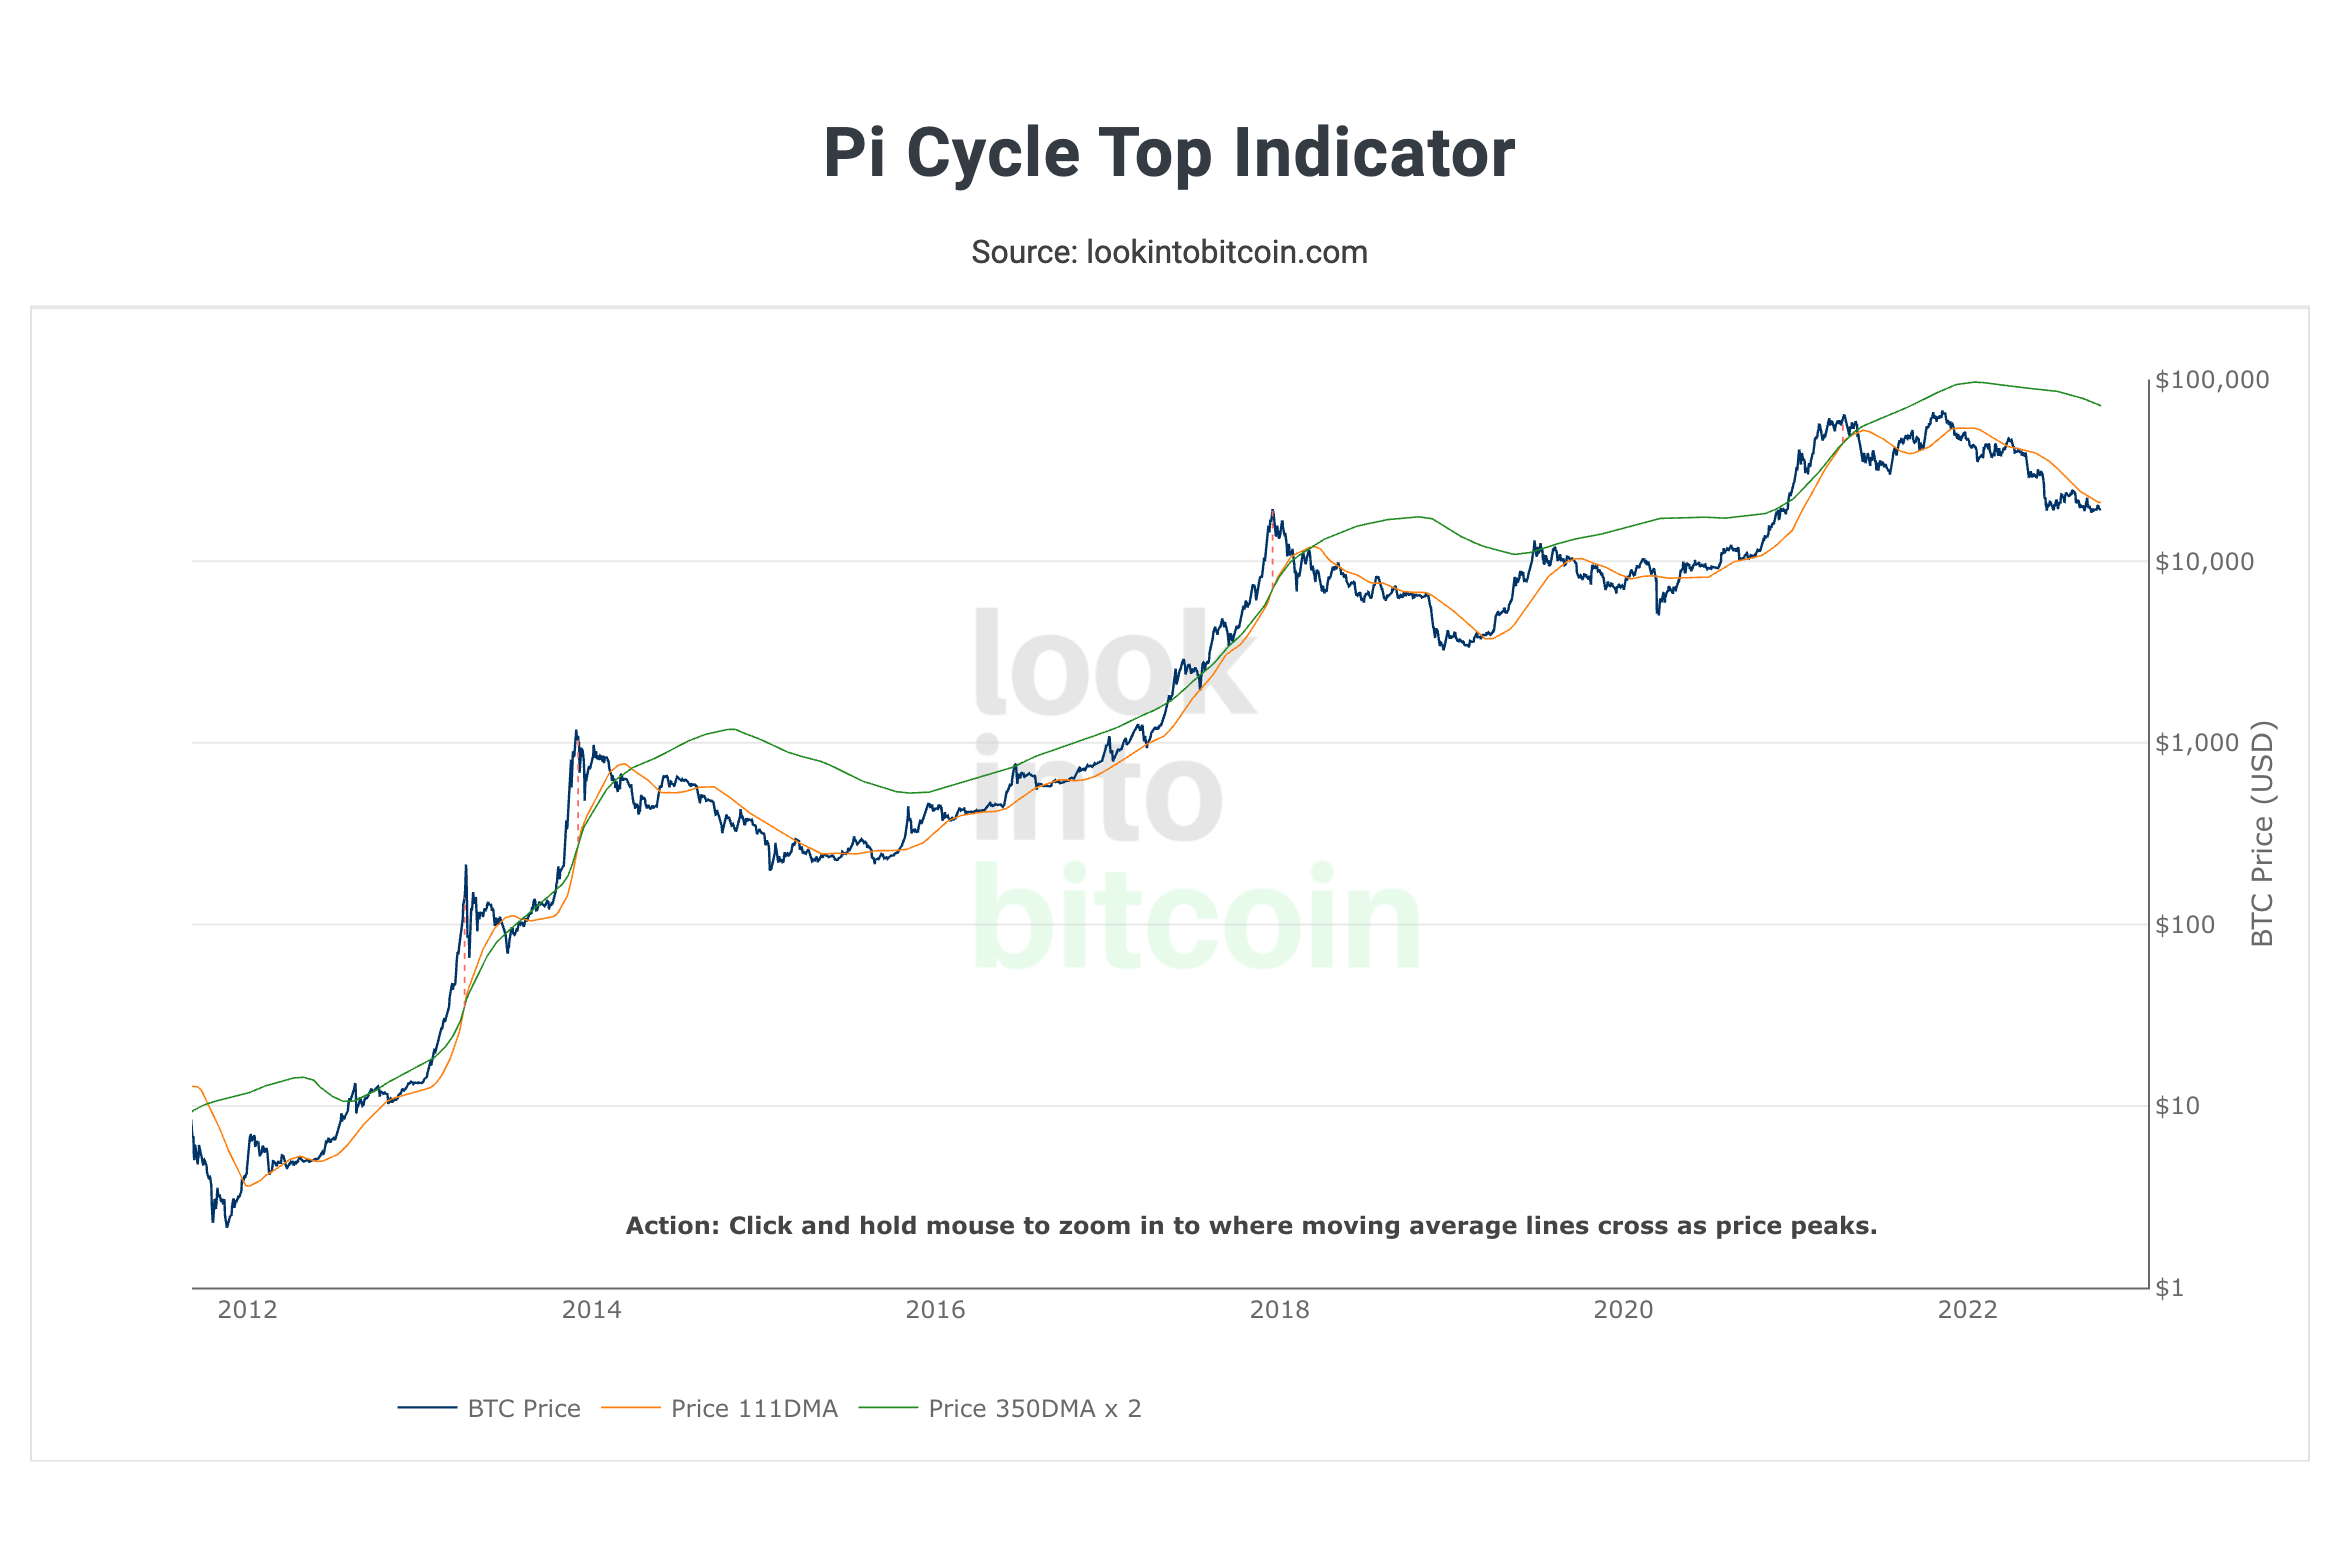 Look Into Bitcoin Pi Cycle Top Indicator